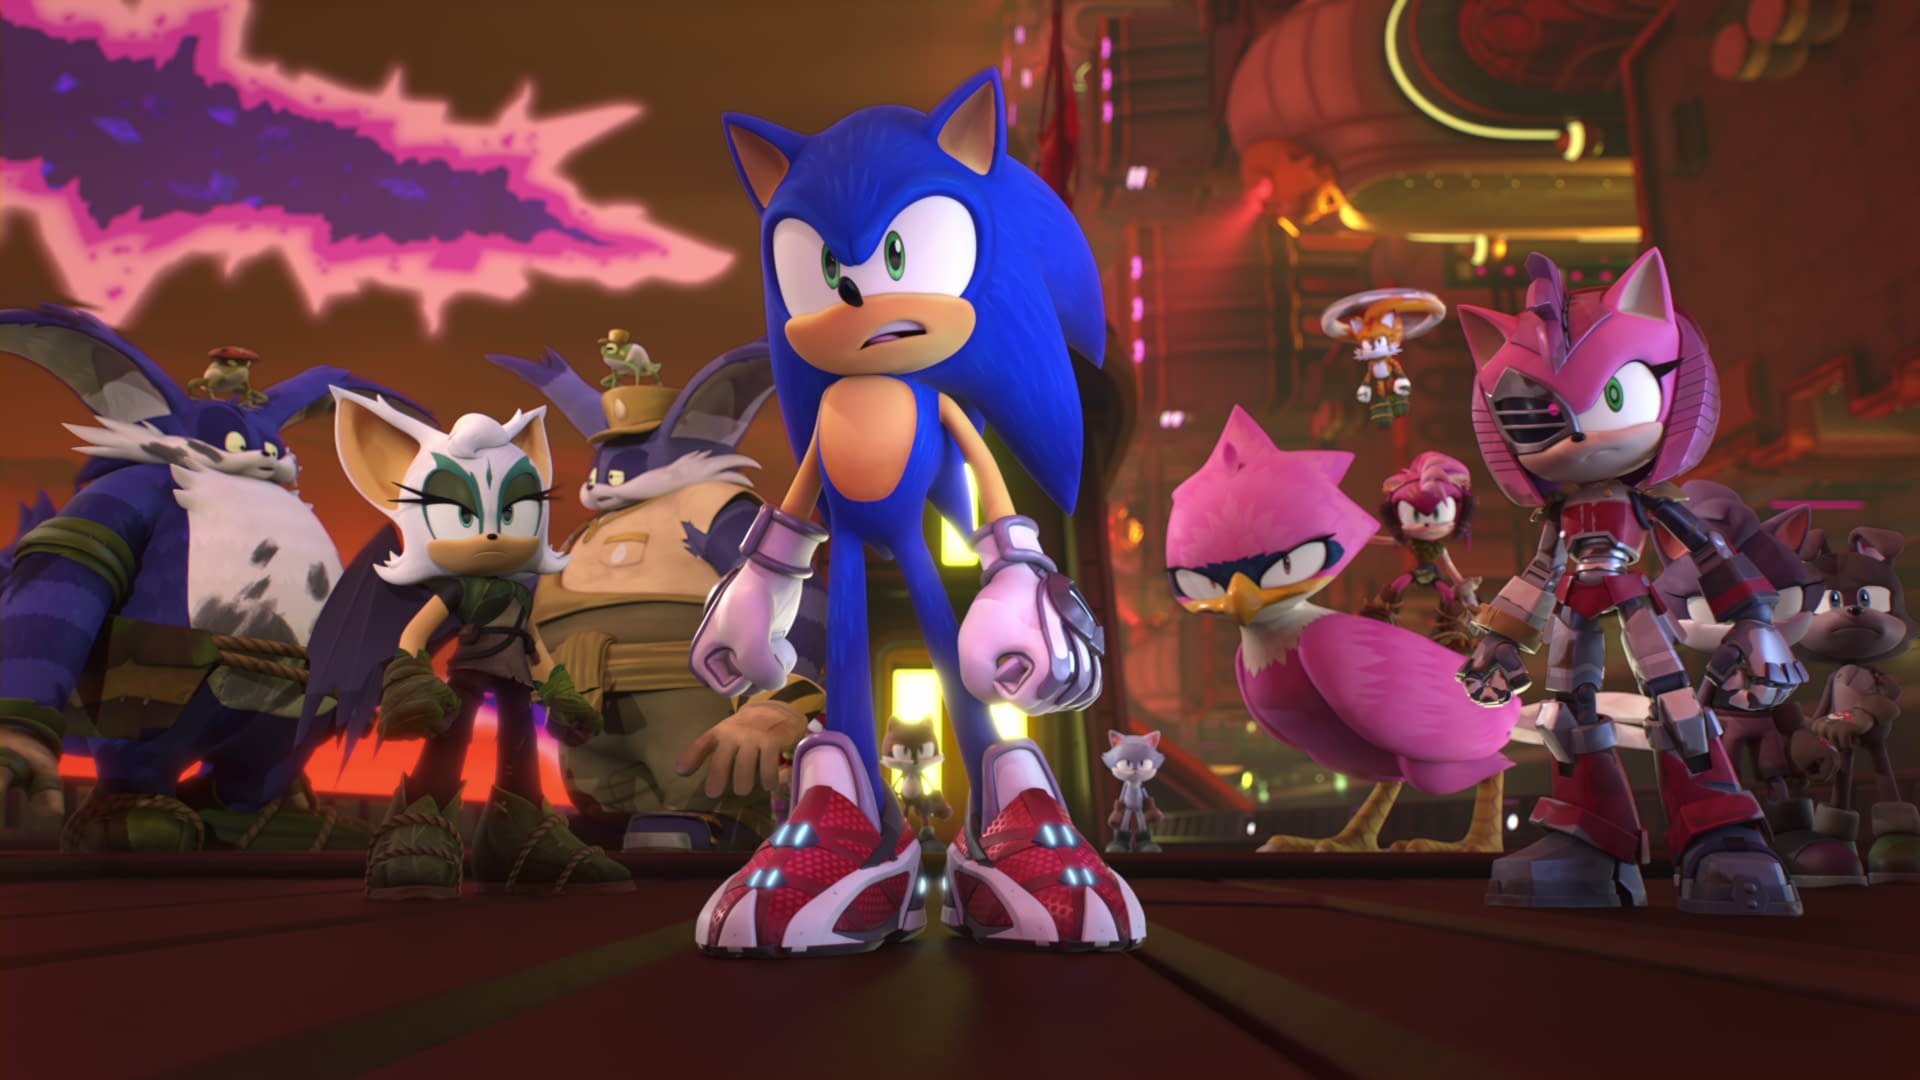 Sonic Prime - Trailer oficial 